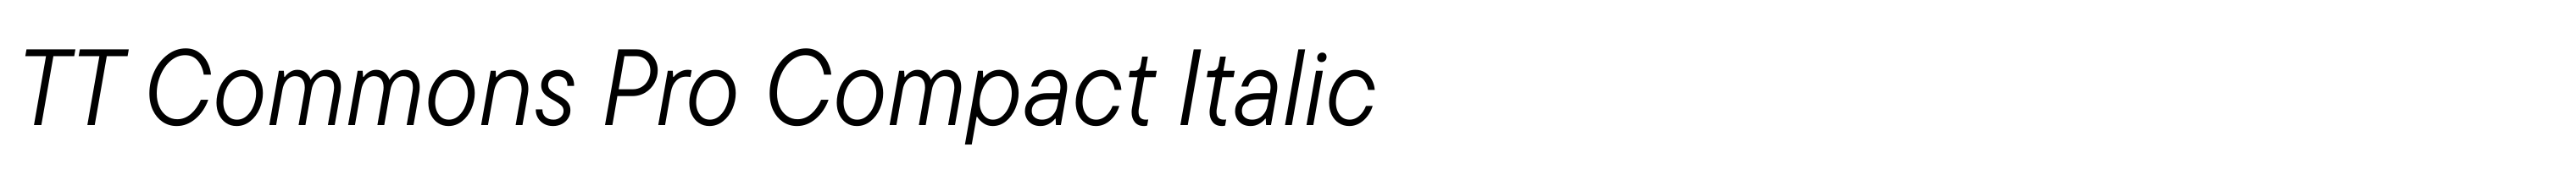 TT Commons Pro Compact Italic